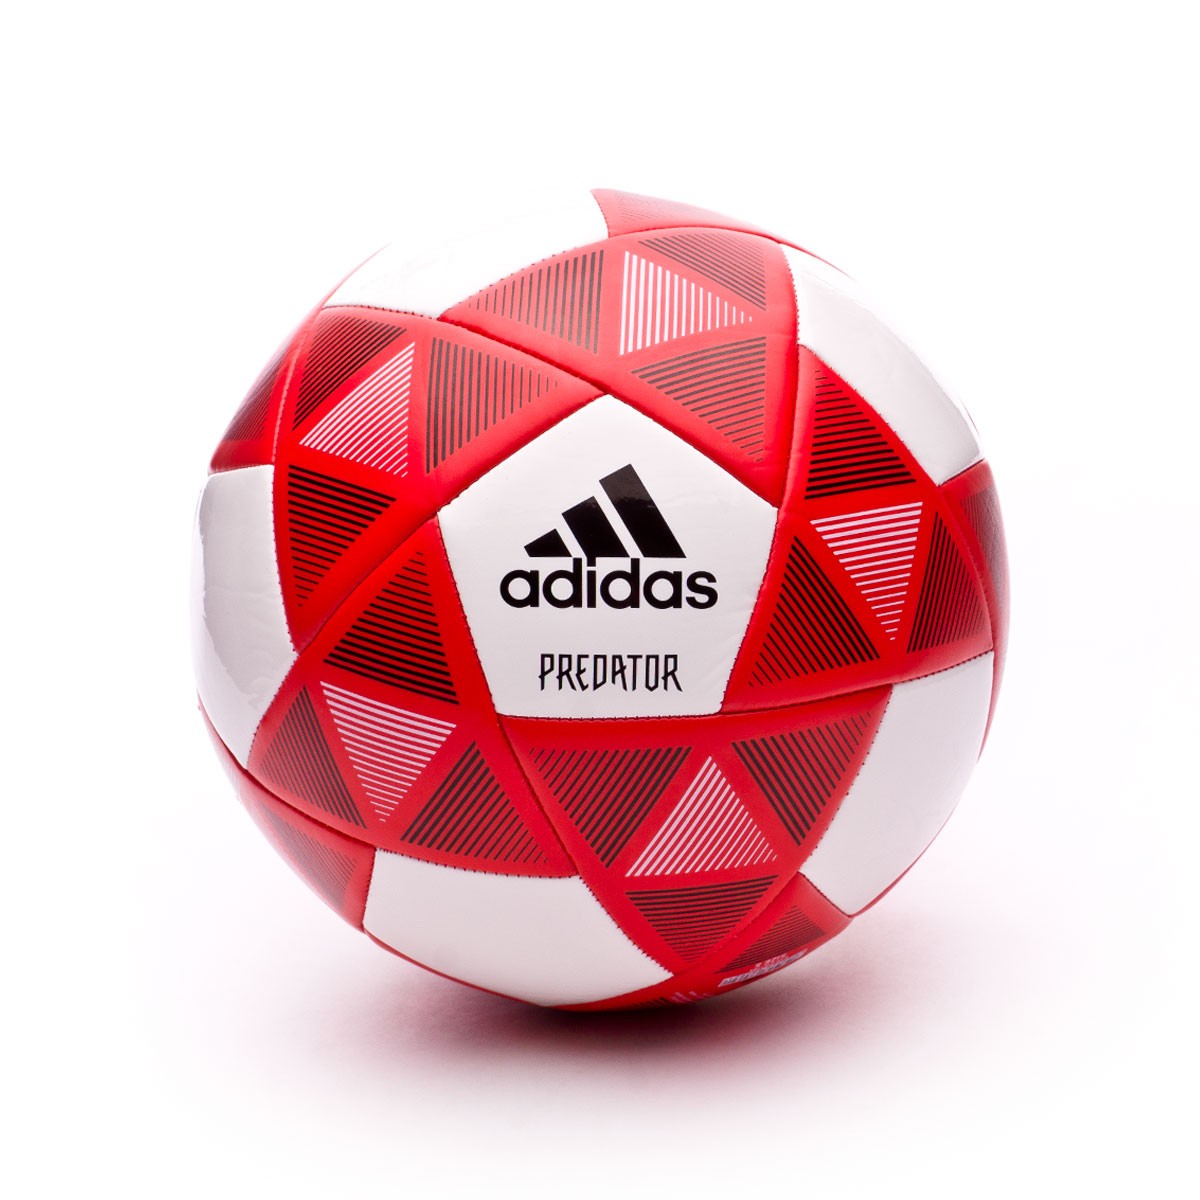 adidas predator soccer ball